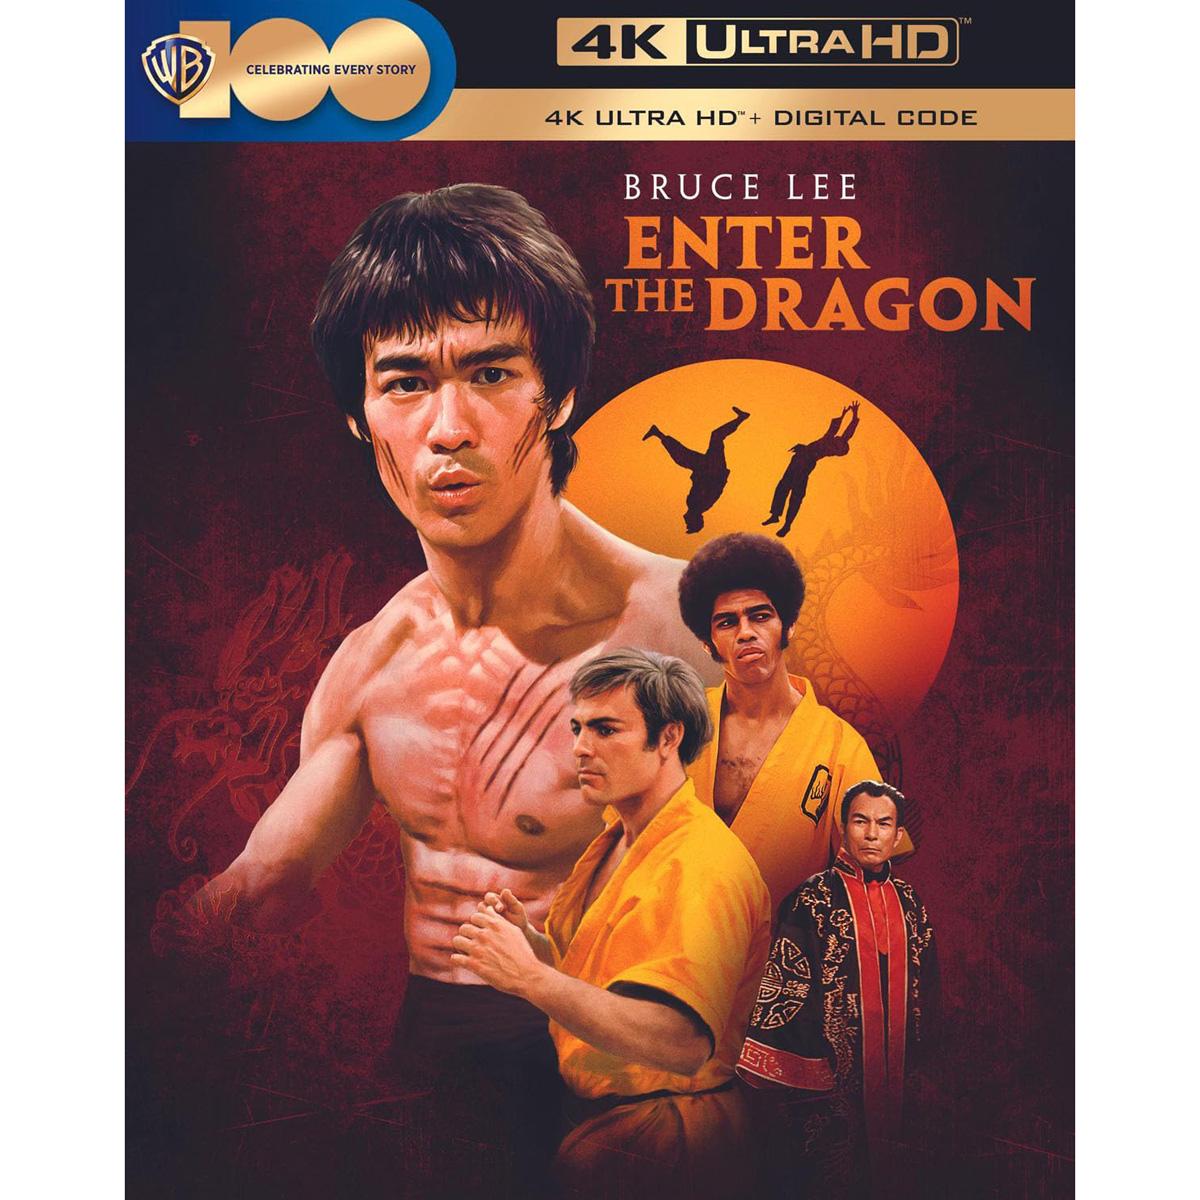 Enter the Dragon 4k Ultra HD Digital for $9.99